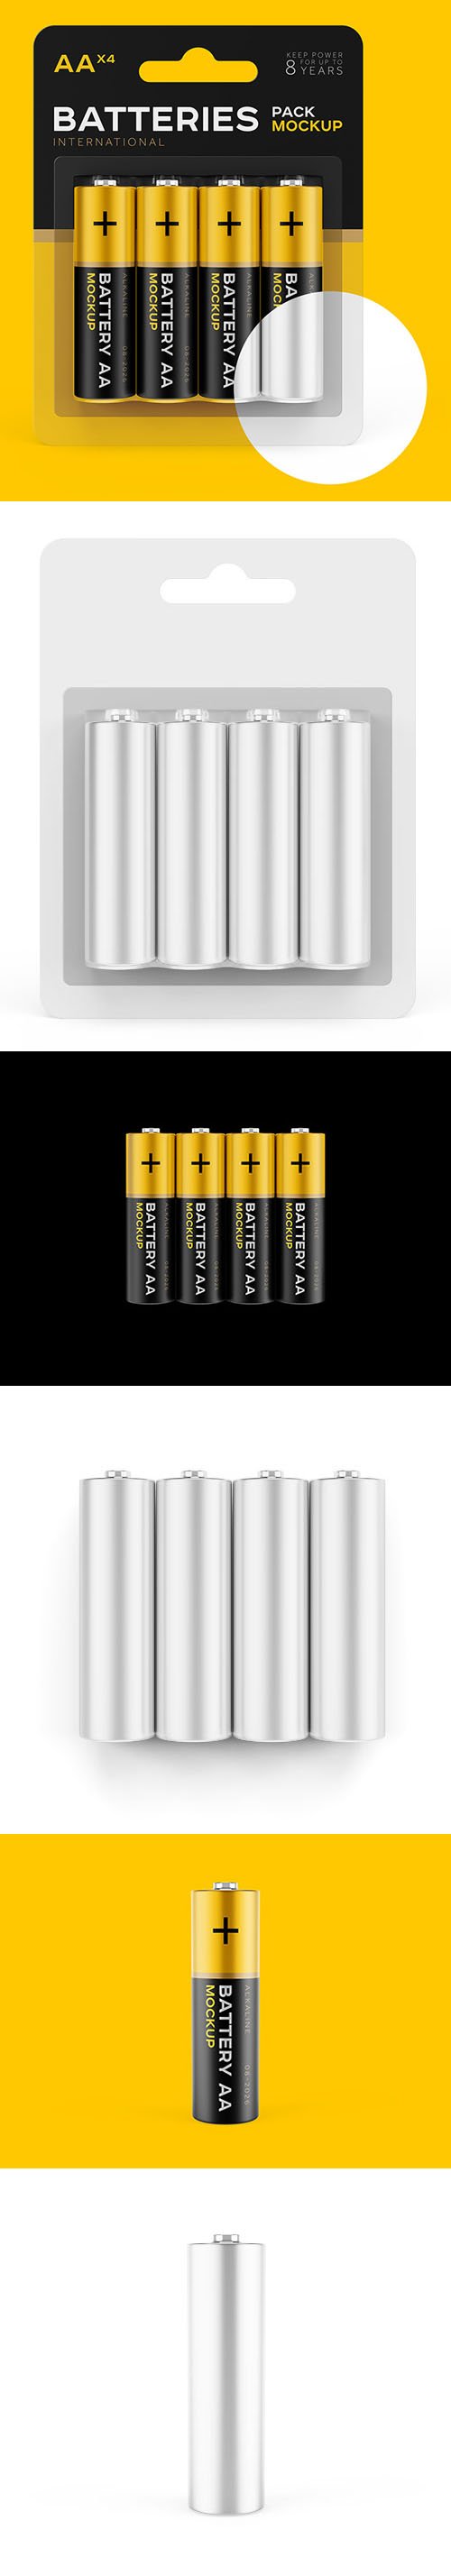 AAx4 Batteries Pack PSD Mockups Templates